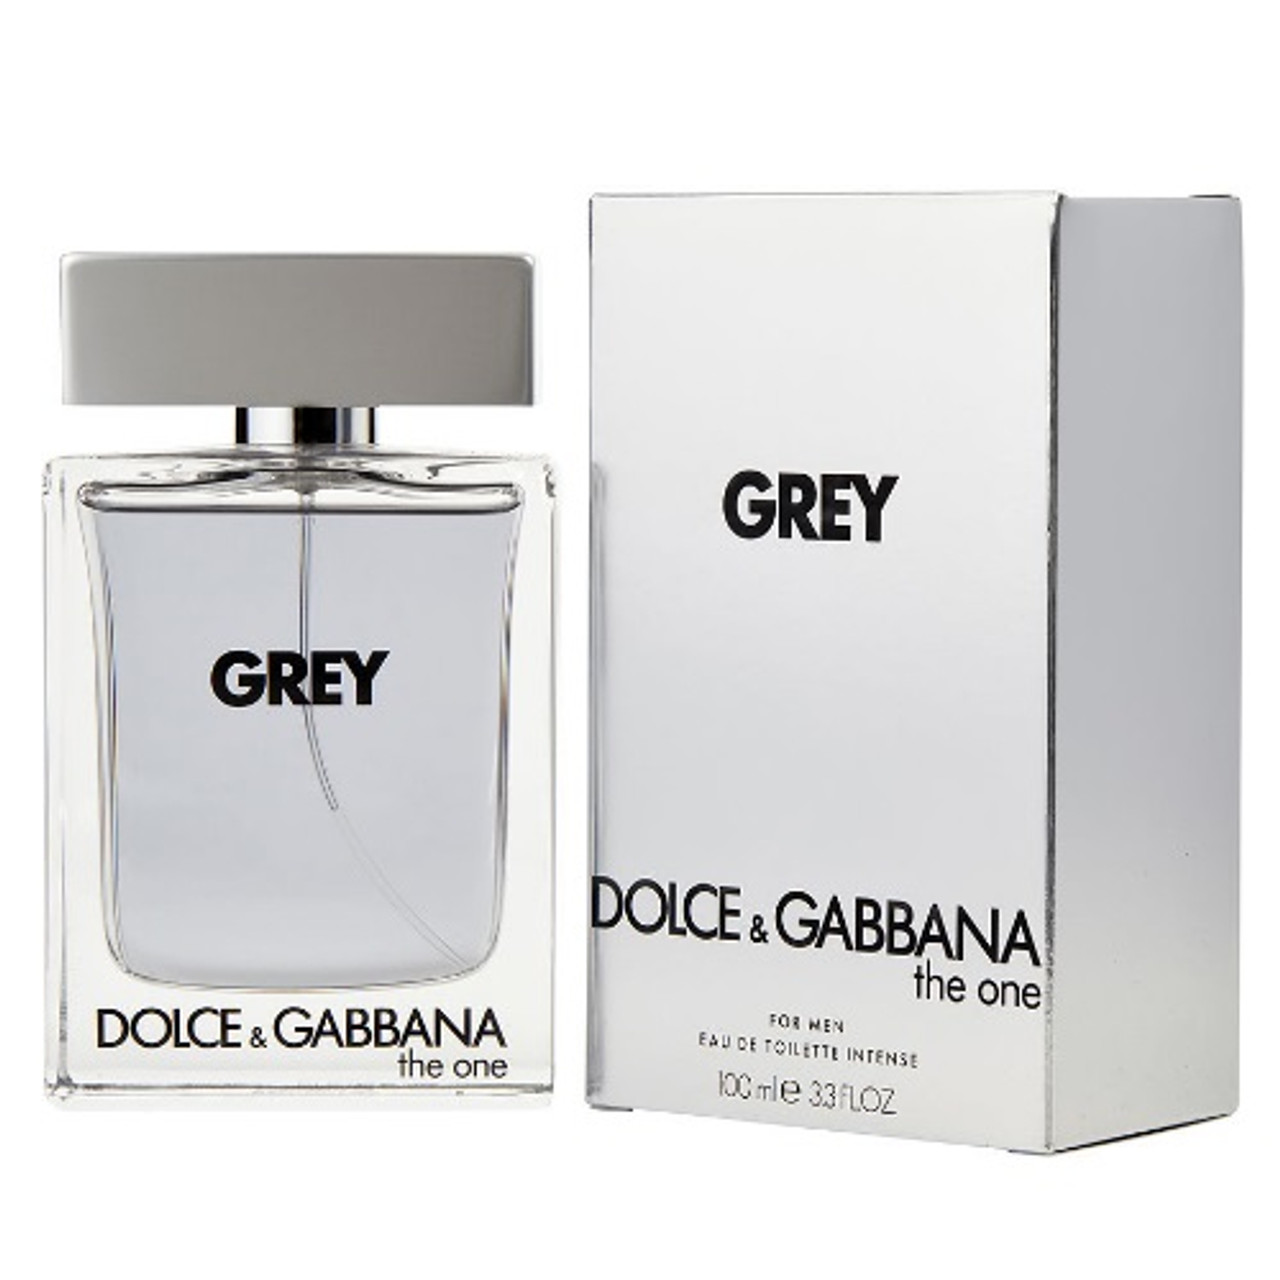 Духи грей. Dolce Gabbana the one Grey 100ml. Dolce & Gabbana Grey the one for men 100ml. Dolce & Gabbana by for men EDT (M) 100ml. Dolce Gabbana 100ml мужские.